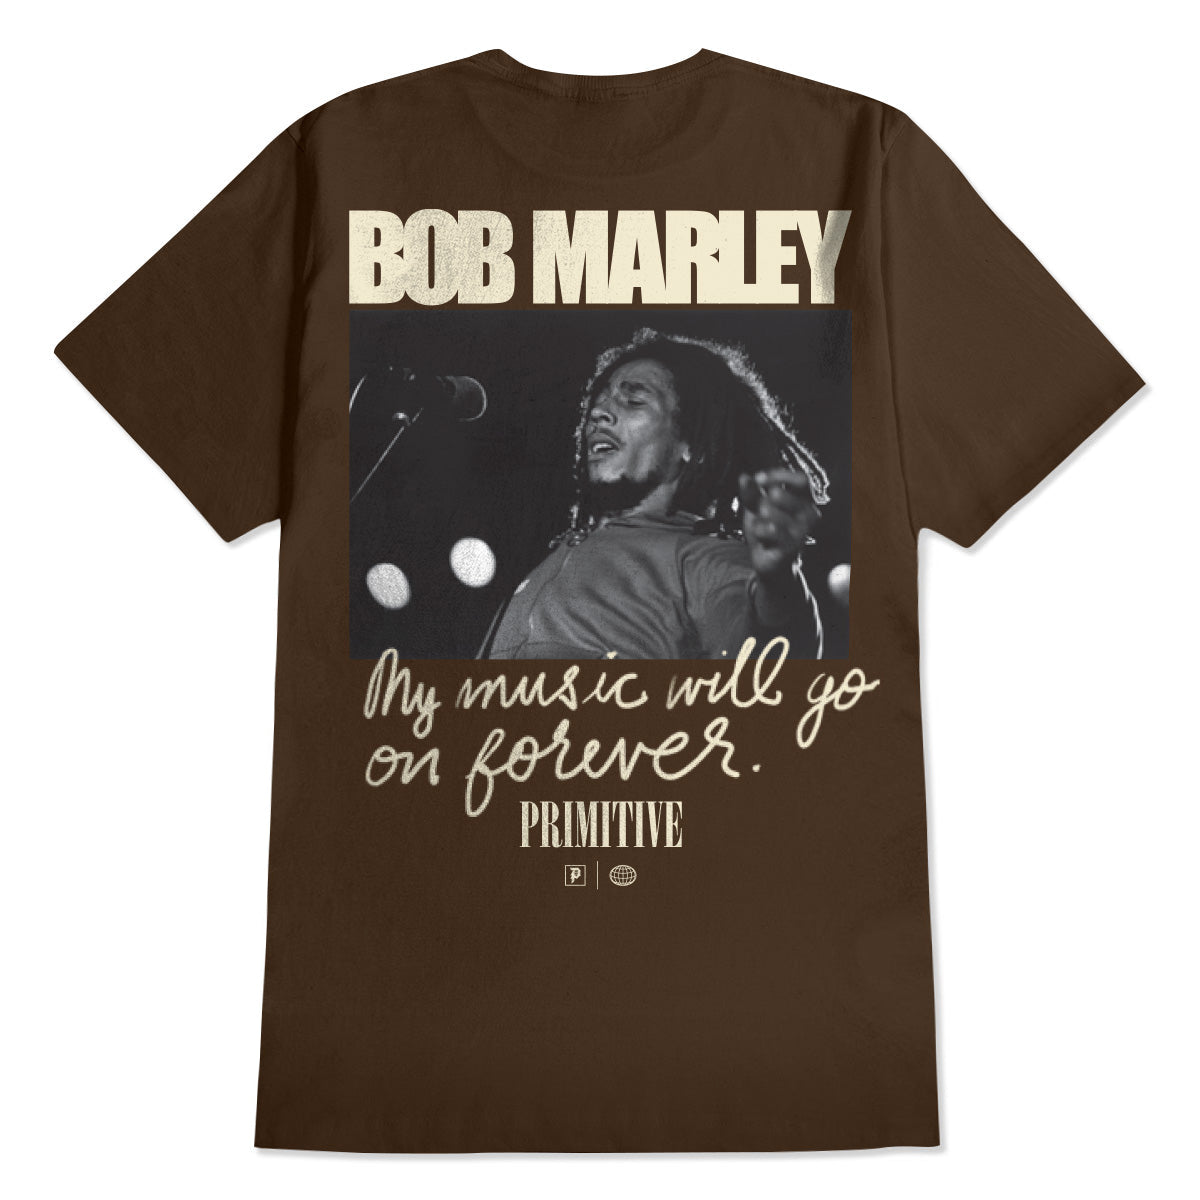 Primitive x Bob Marley Forever T-Shirt - Brown image 1